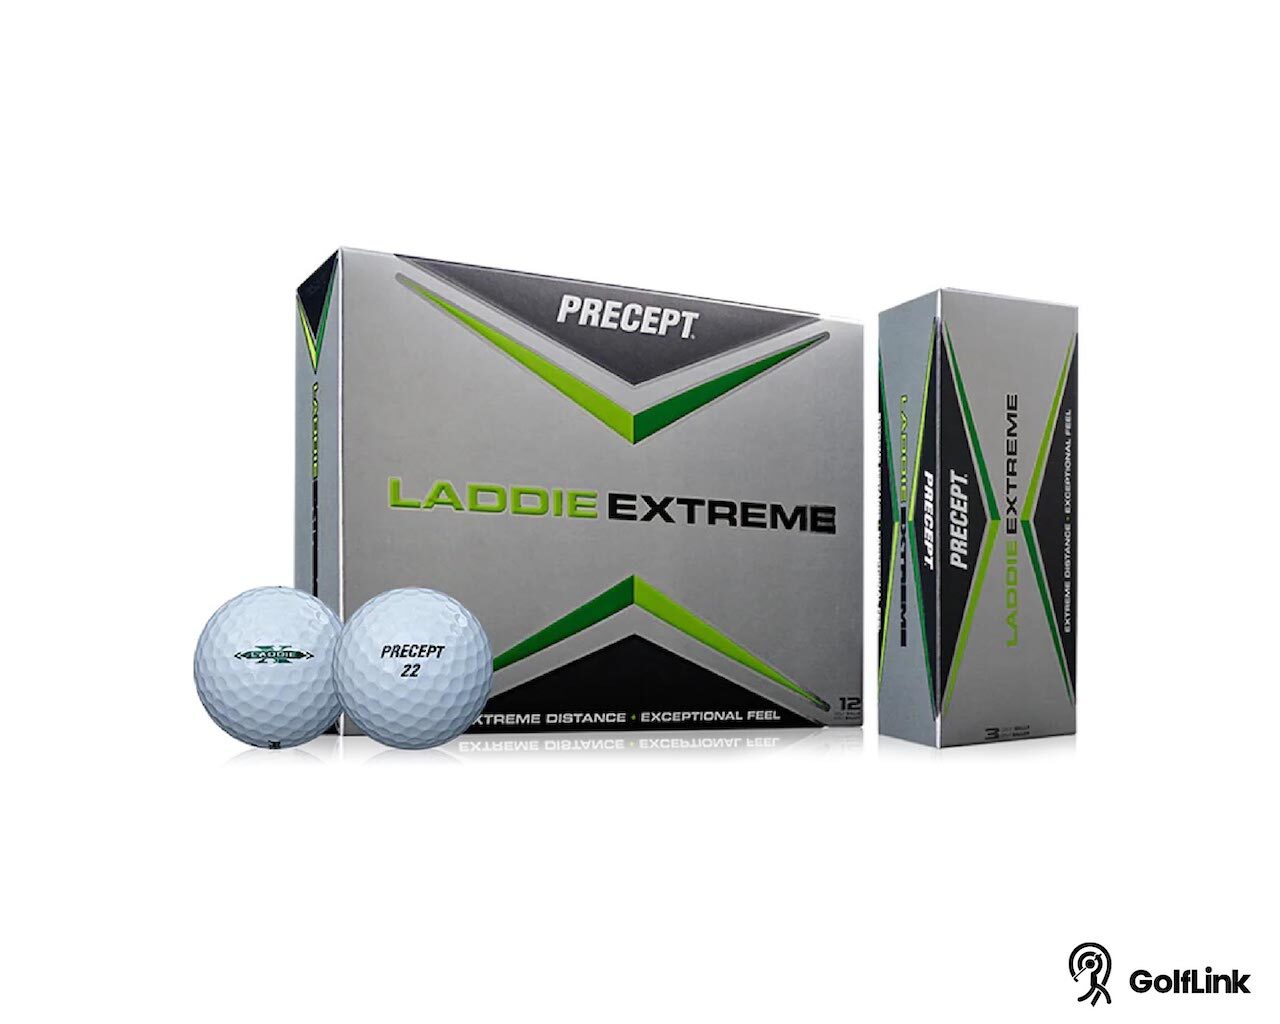 Precept Laddie Extreme golf ball box